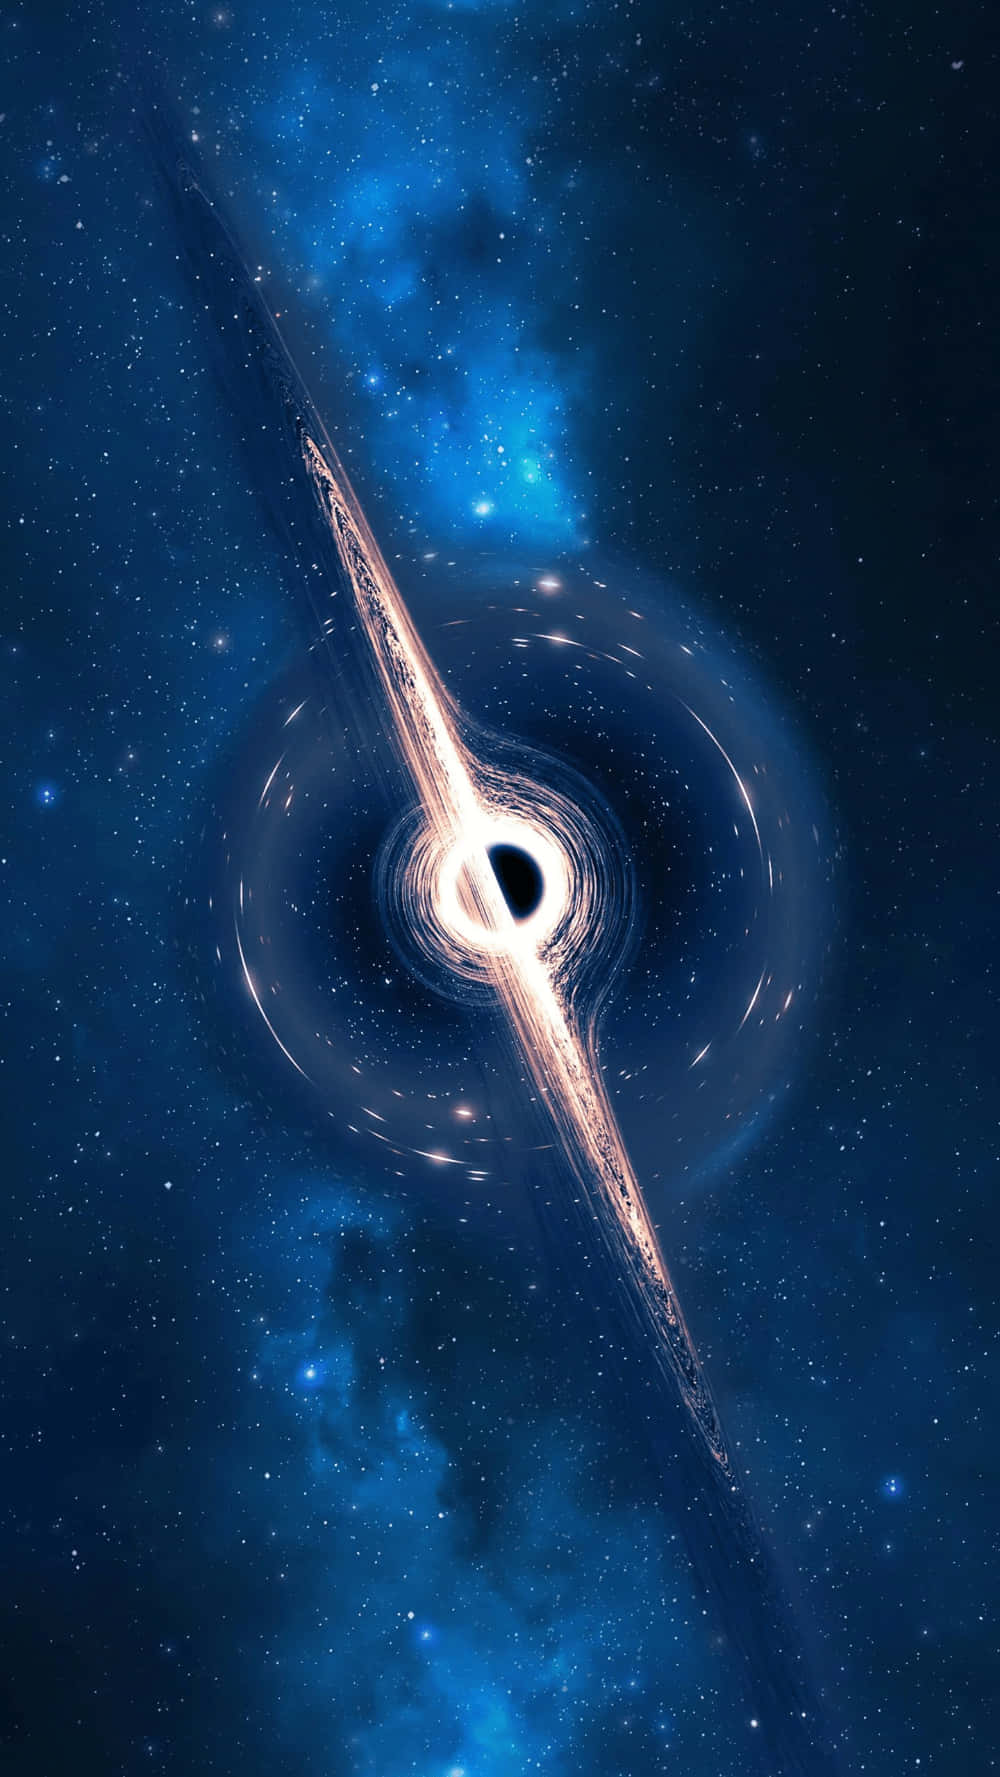 "Take a trip through the galaxy with Trippy Galaxy" Wallpaper